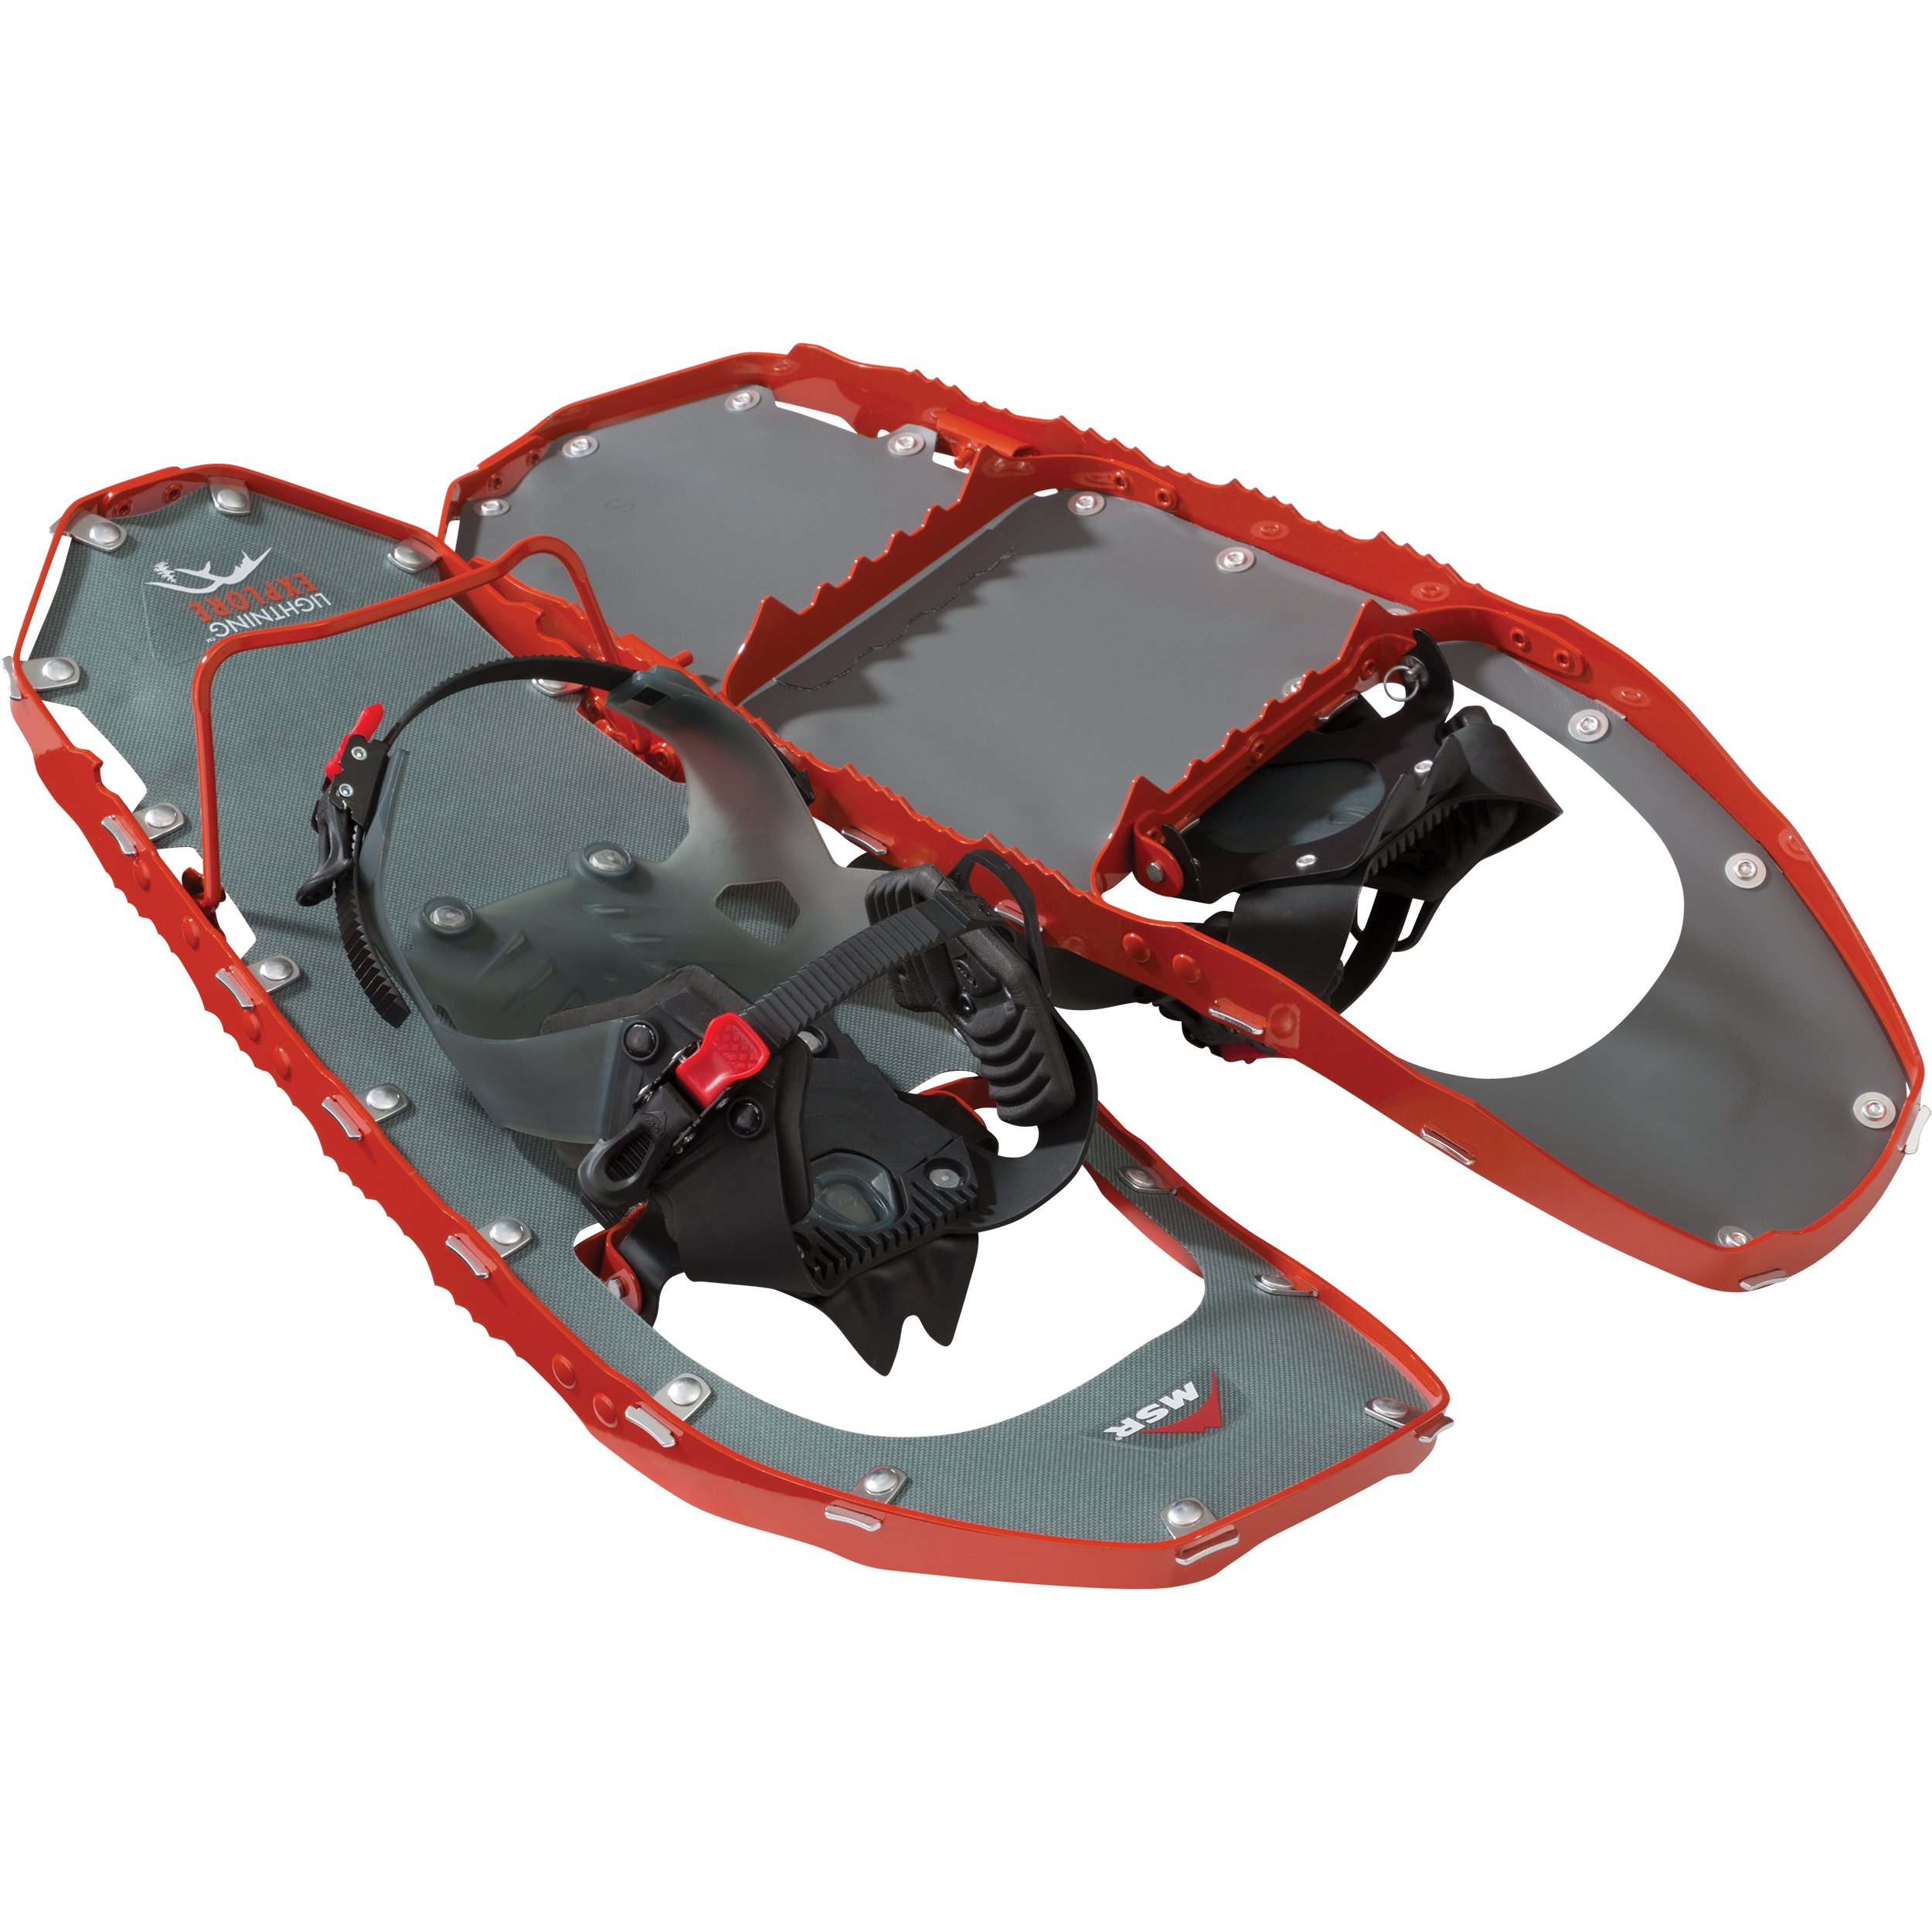 Lightning™ Explore MSR Snowshoes - All-Day Comfort | MSR®